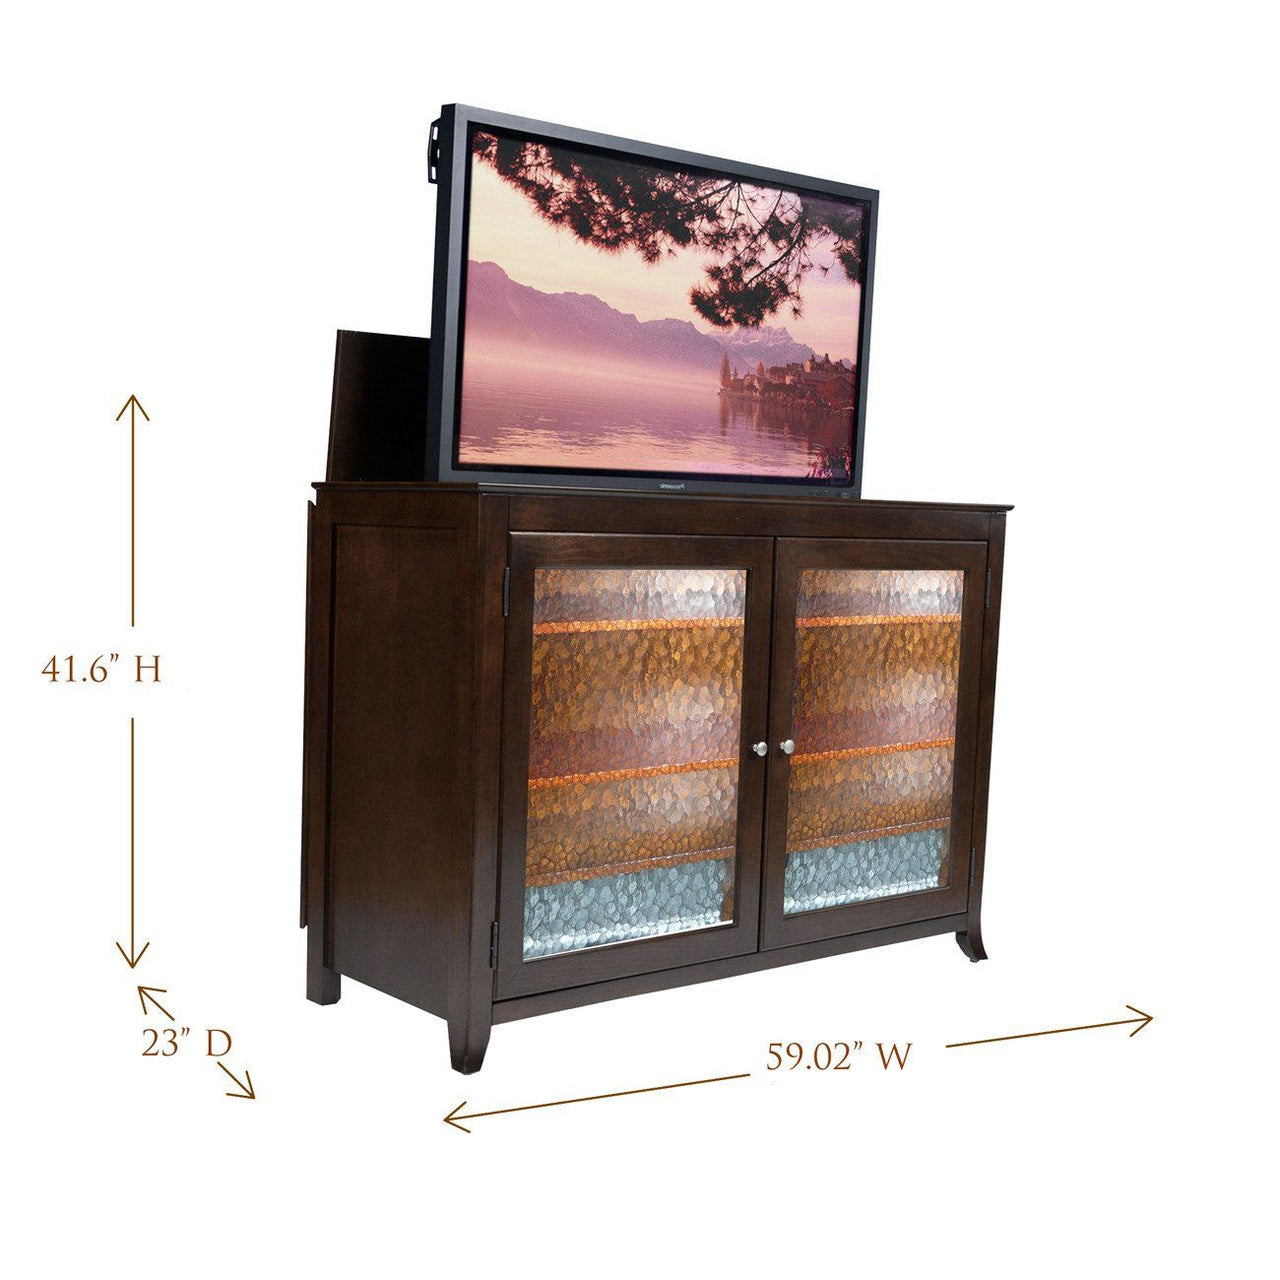 Touchstone Carmel Full Size Tv Lift Cabinets For Up To 60” Flat Screen Tv’S Tv Lift Cabinets Touchstone 